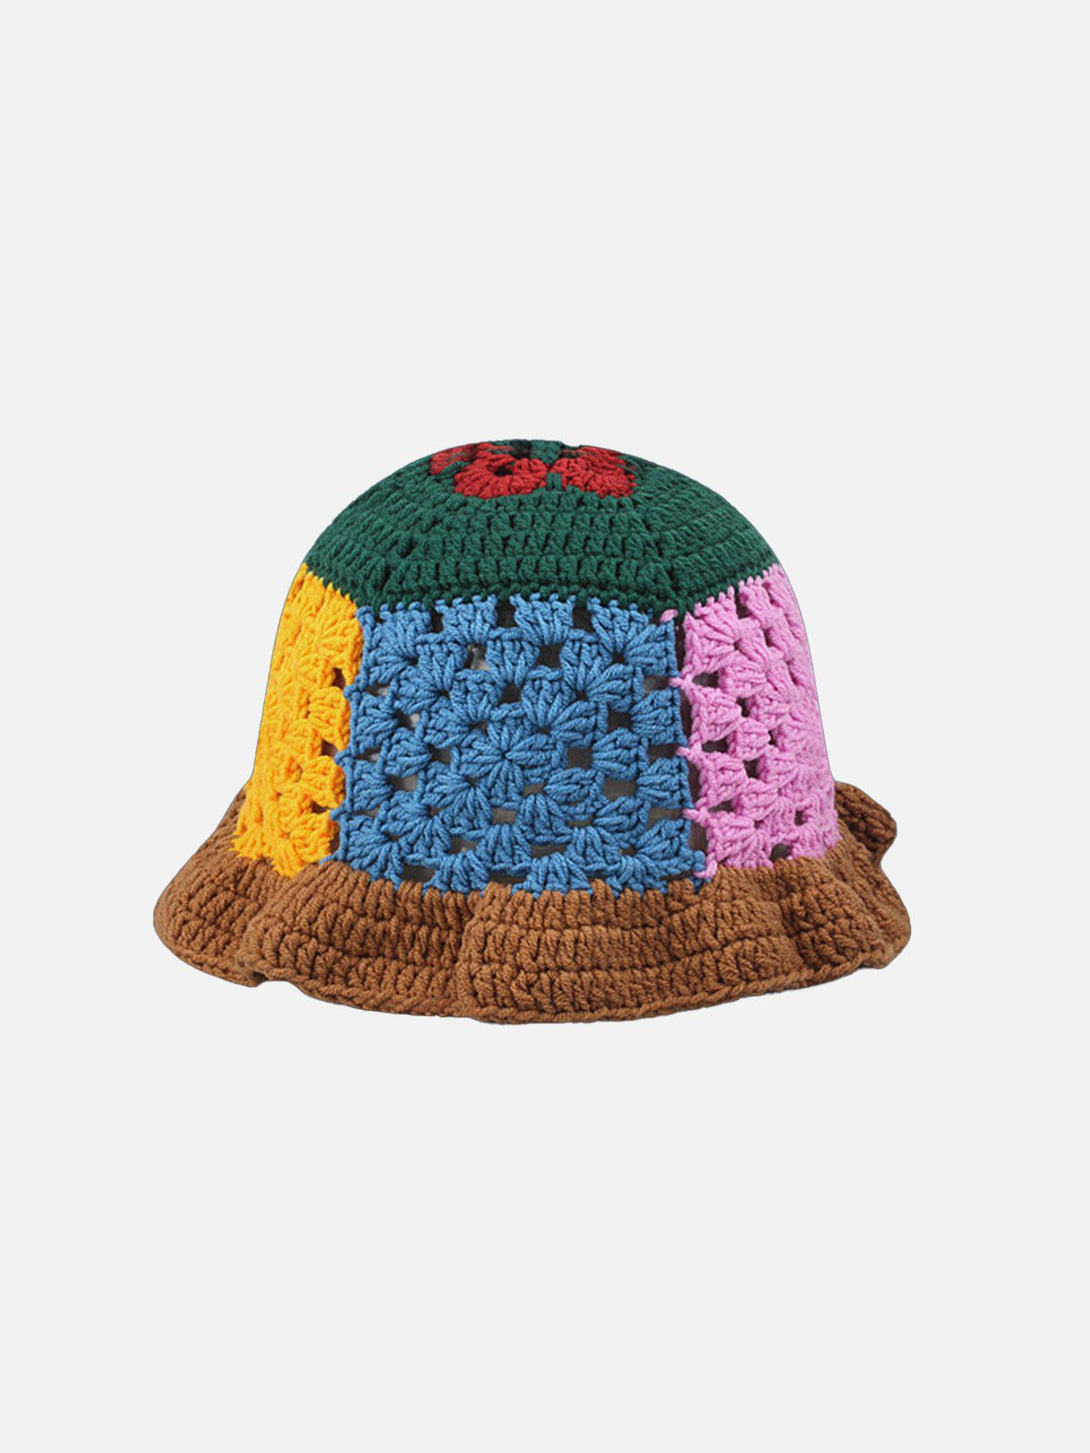 Majesda® - Handmade Crochet Open Knit Bucket Hat- Outfit Ideas - Streetwear Fashion - majesda.com